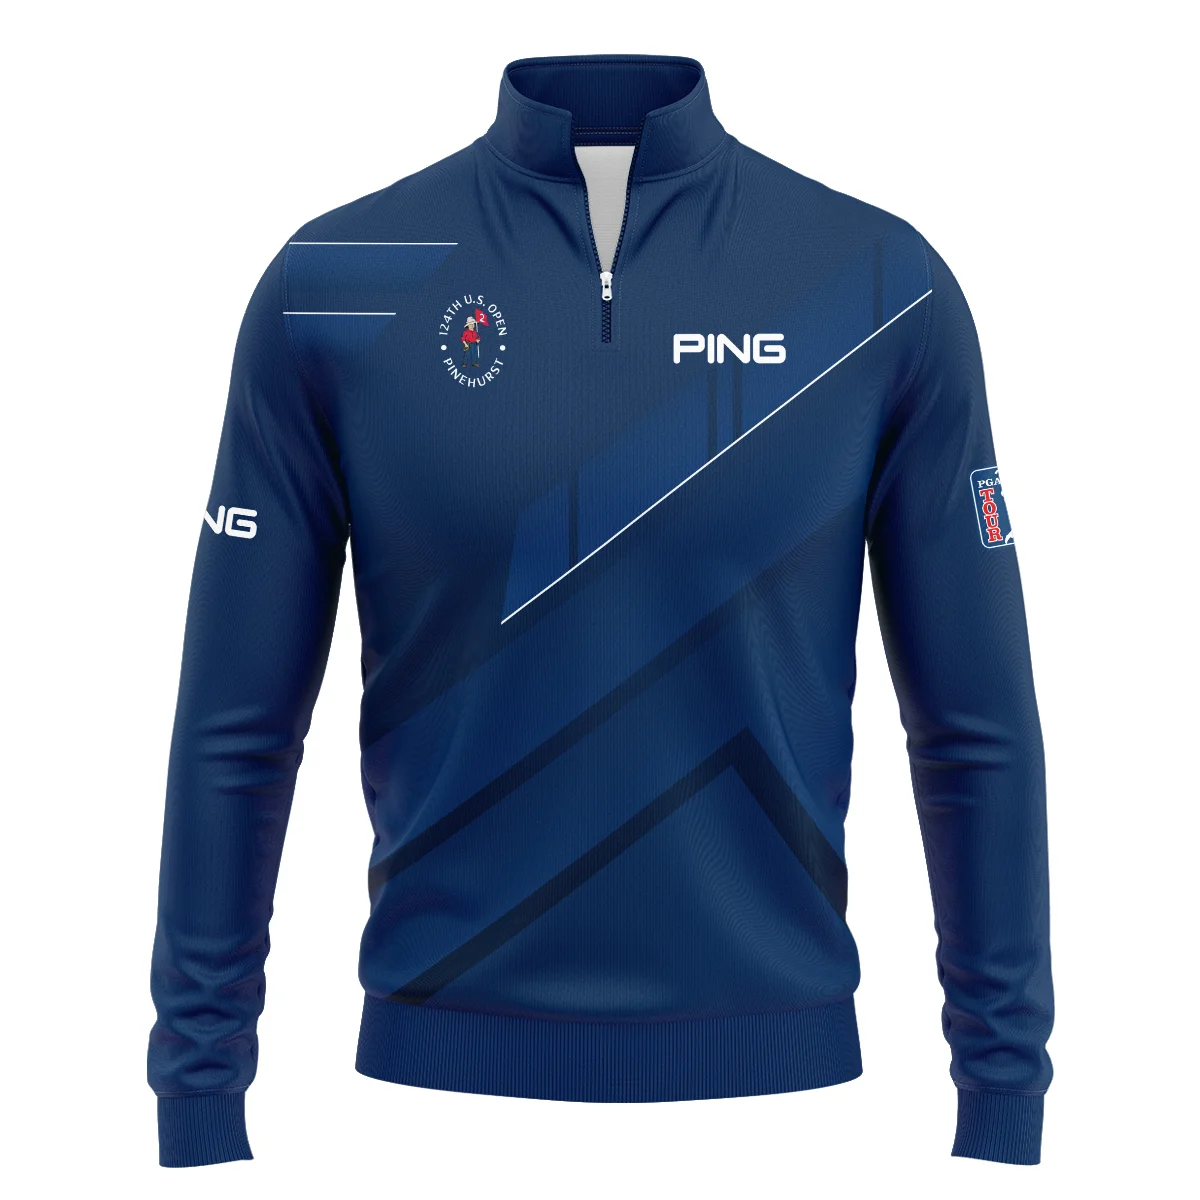 Ping 124th U.S. Open Pinehurst Blue Gradient With White Straight Line Quarter-Zip Jacket Style Classic Quarter-Zip Jacket